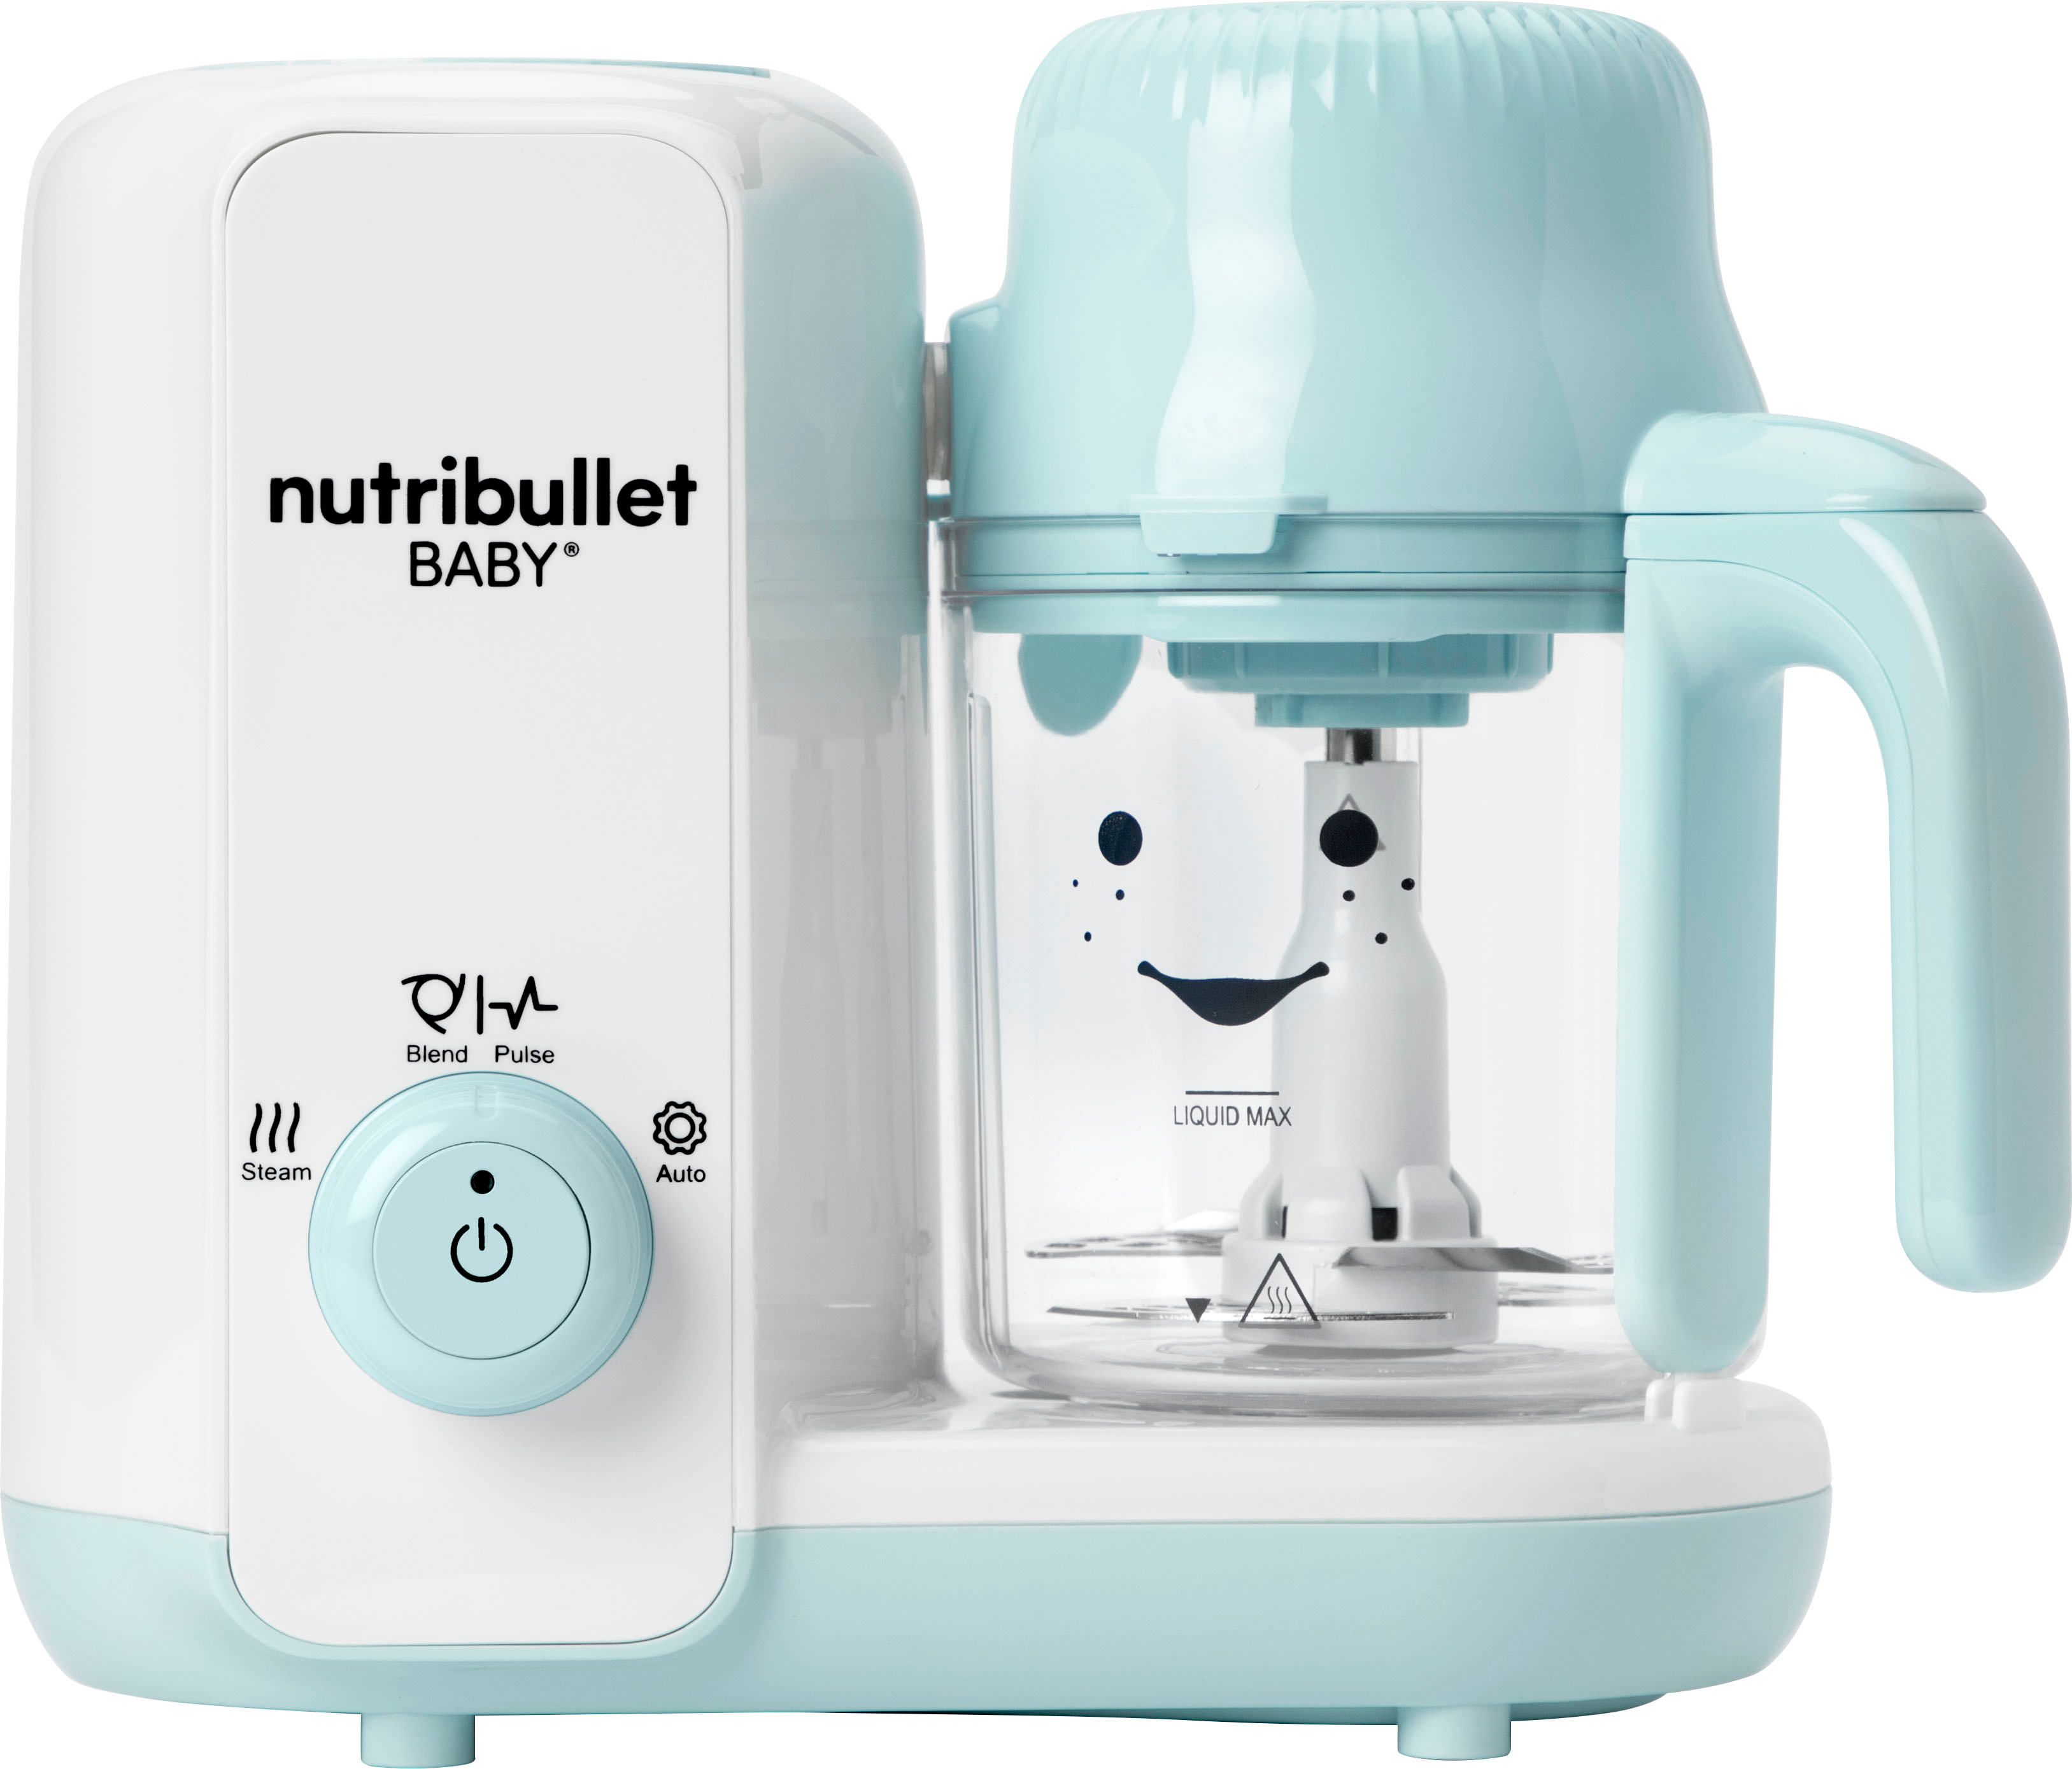 Nutribullet Baby review